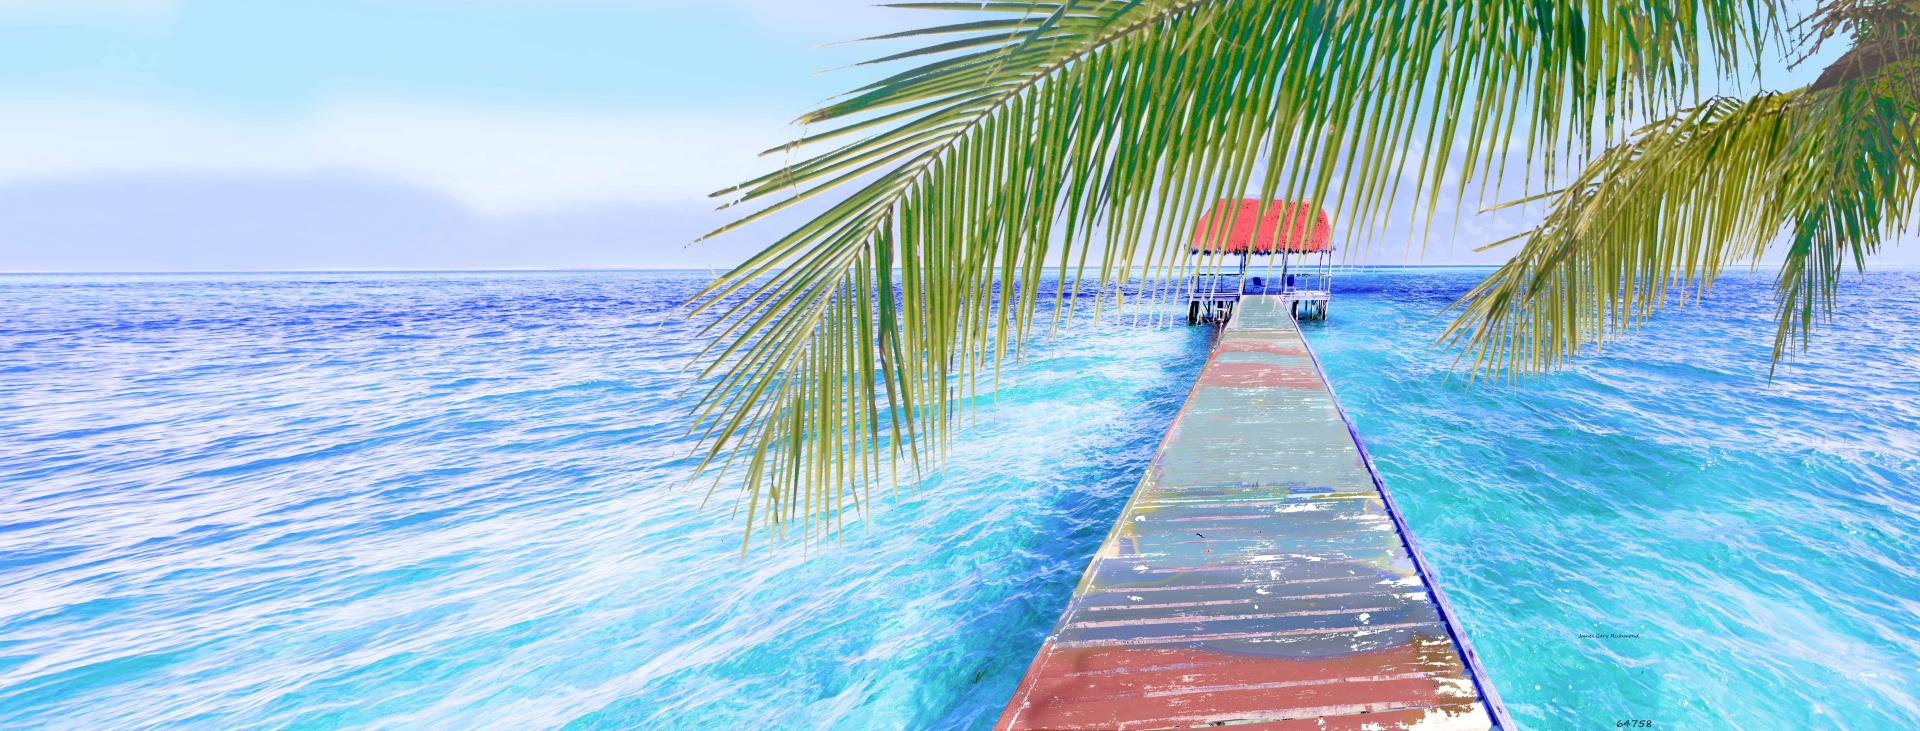 64758p painted dock, seascape, tropical, caribbean 5 copy.jpg